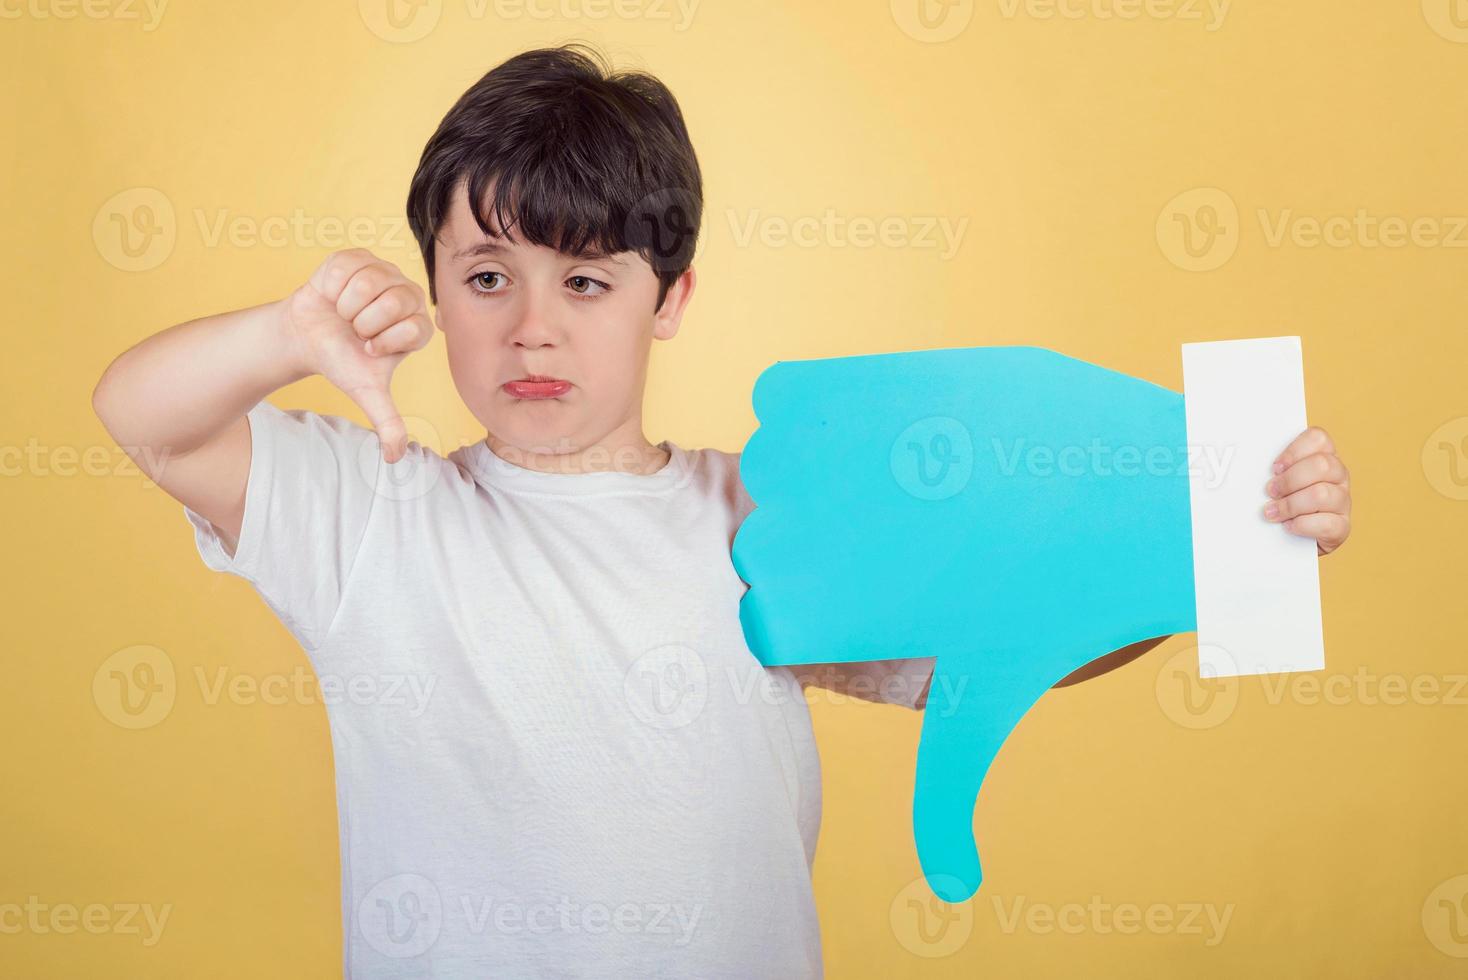 boy holding a dislike icon on yellow background photo